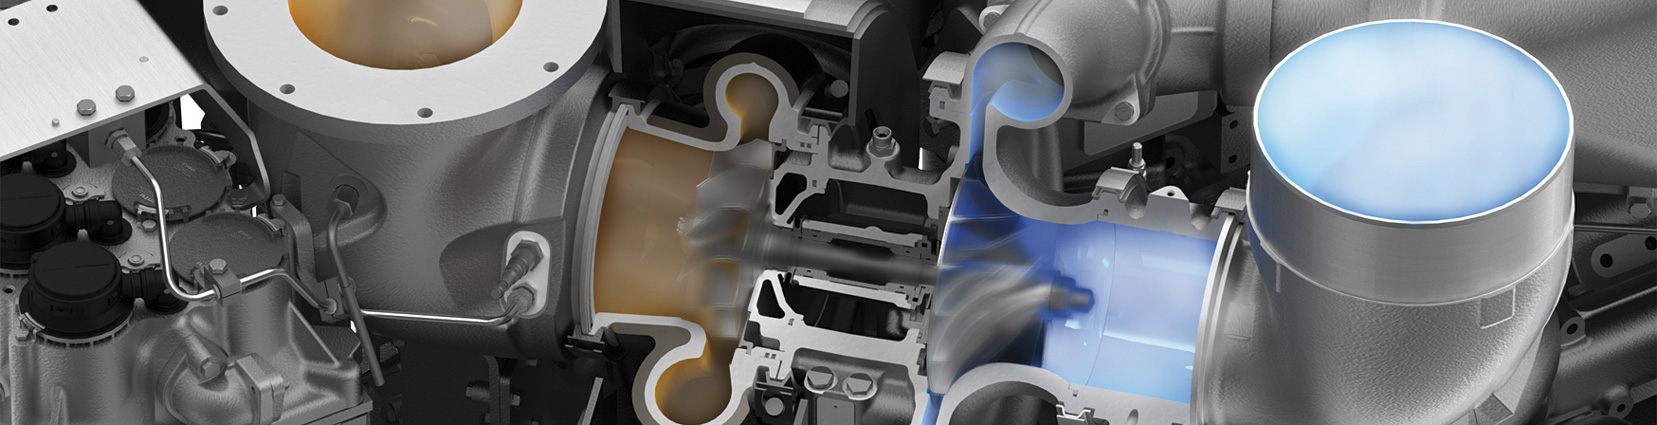 Turbocharging: Key technology for high-performance engines